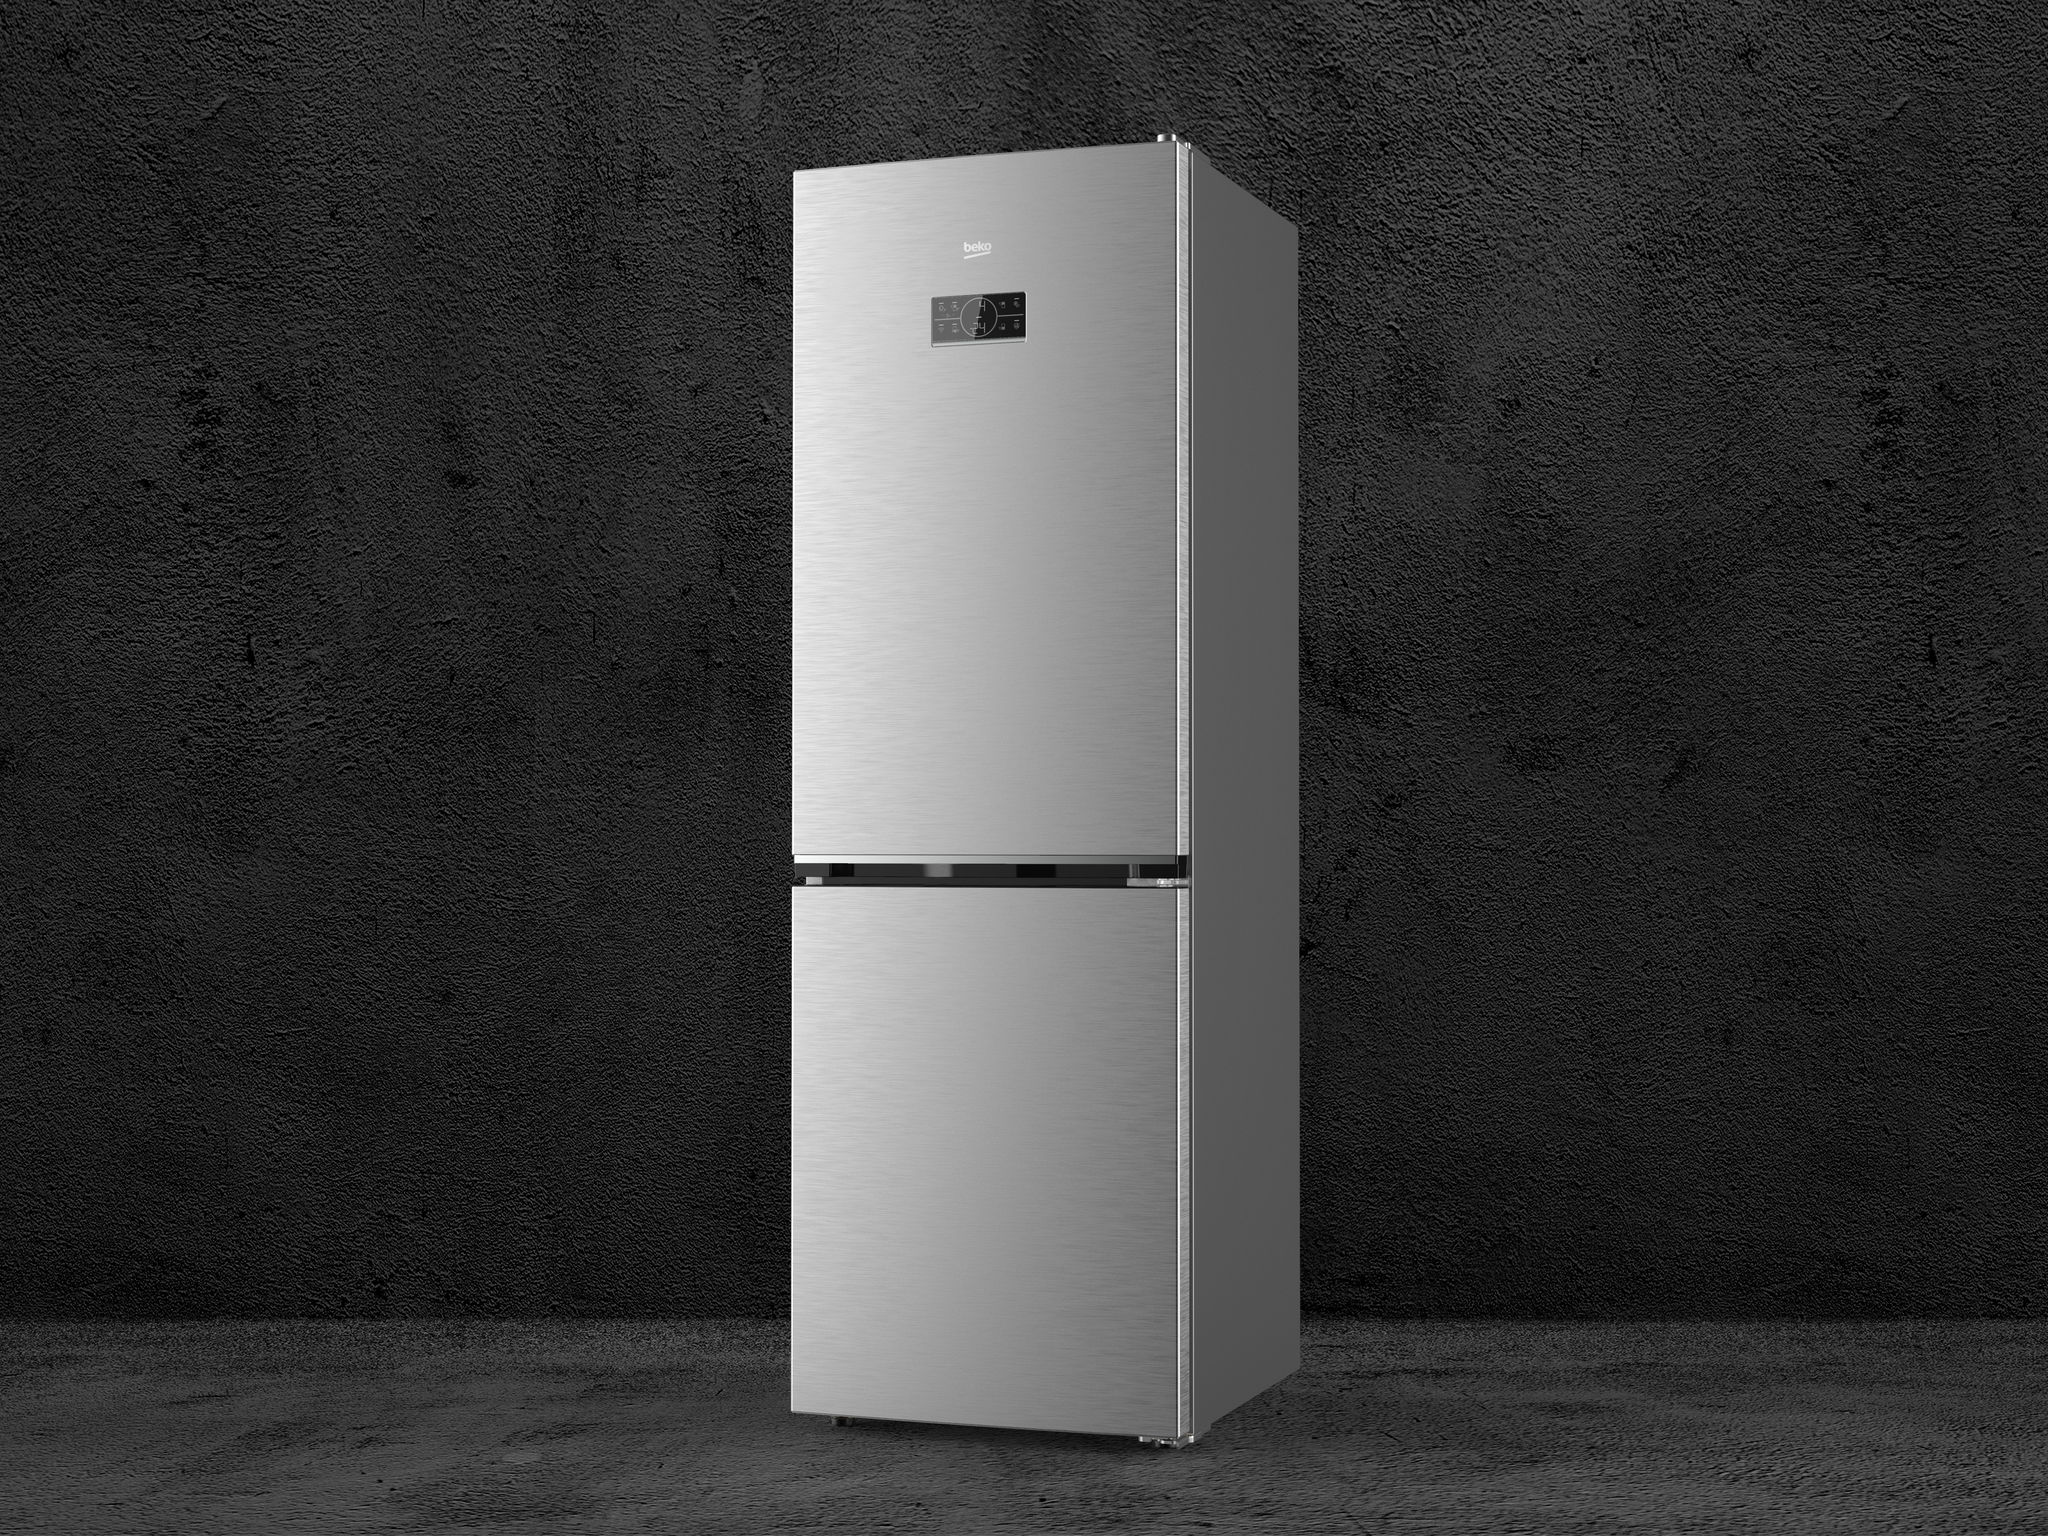 Beko K60 Refrigerator